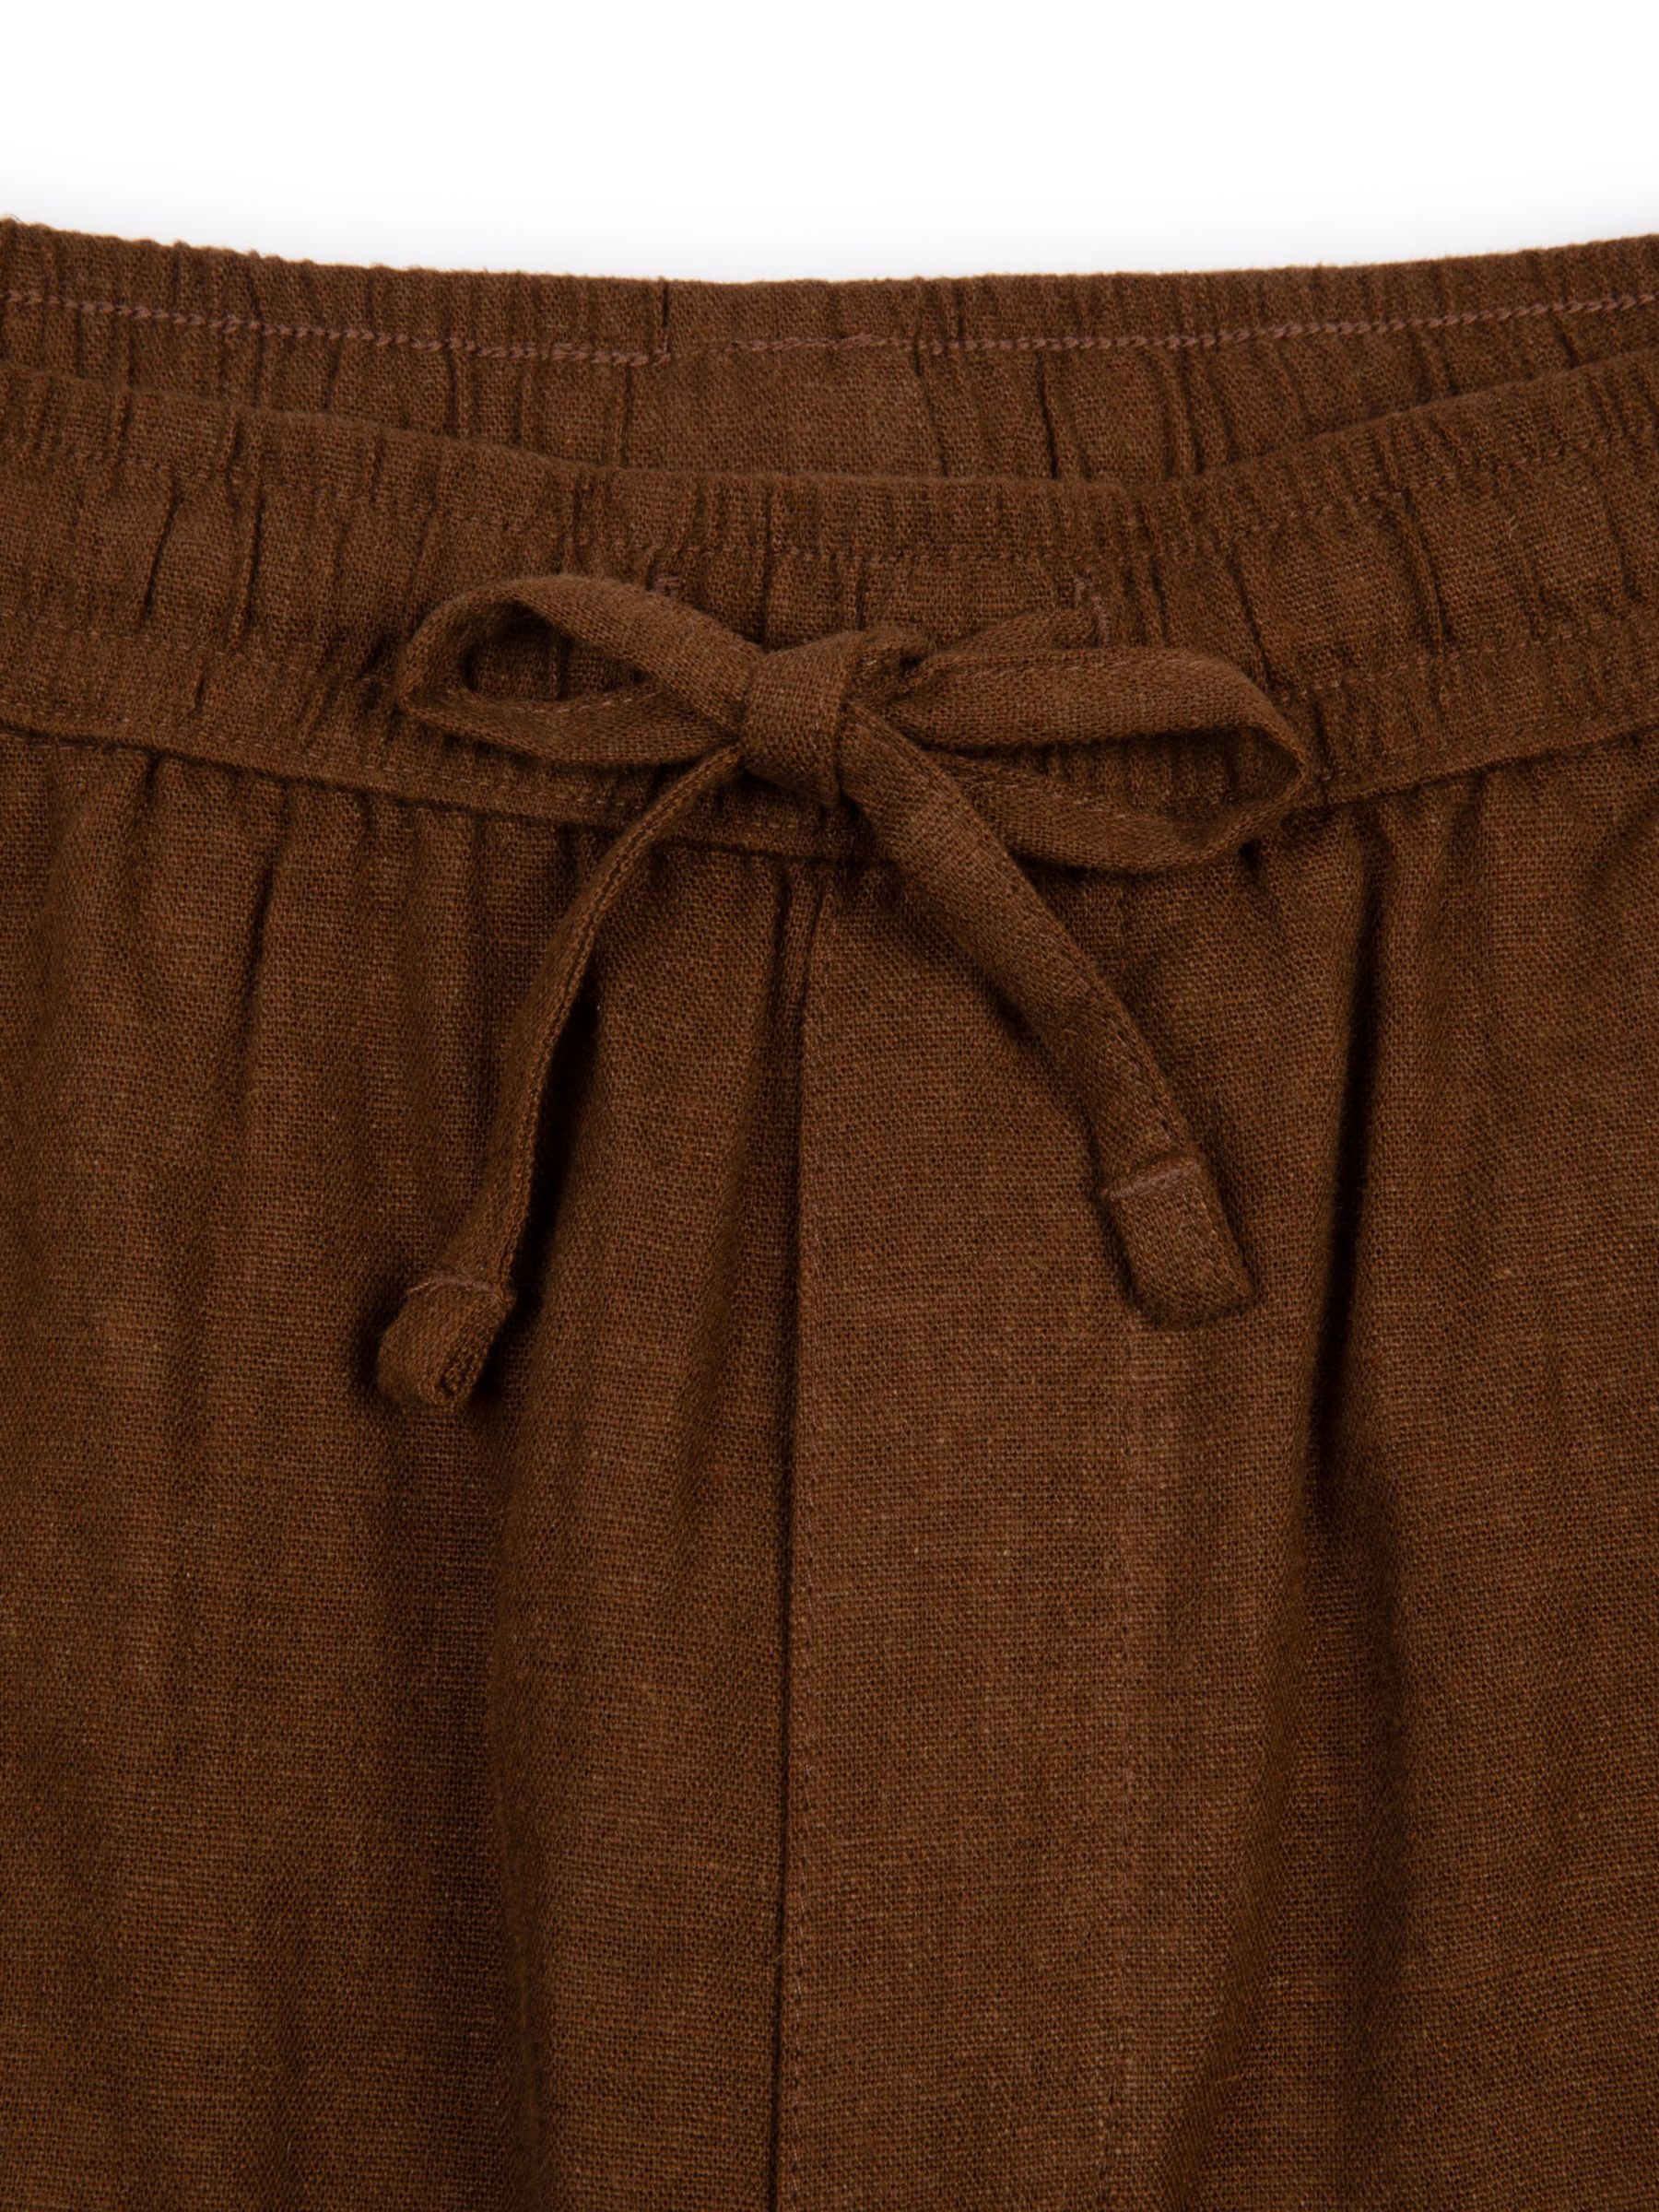 Chelsea Peers Linen Blend Shorts, Brown, L